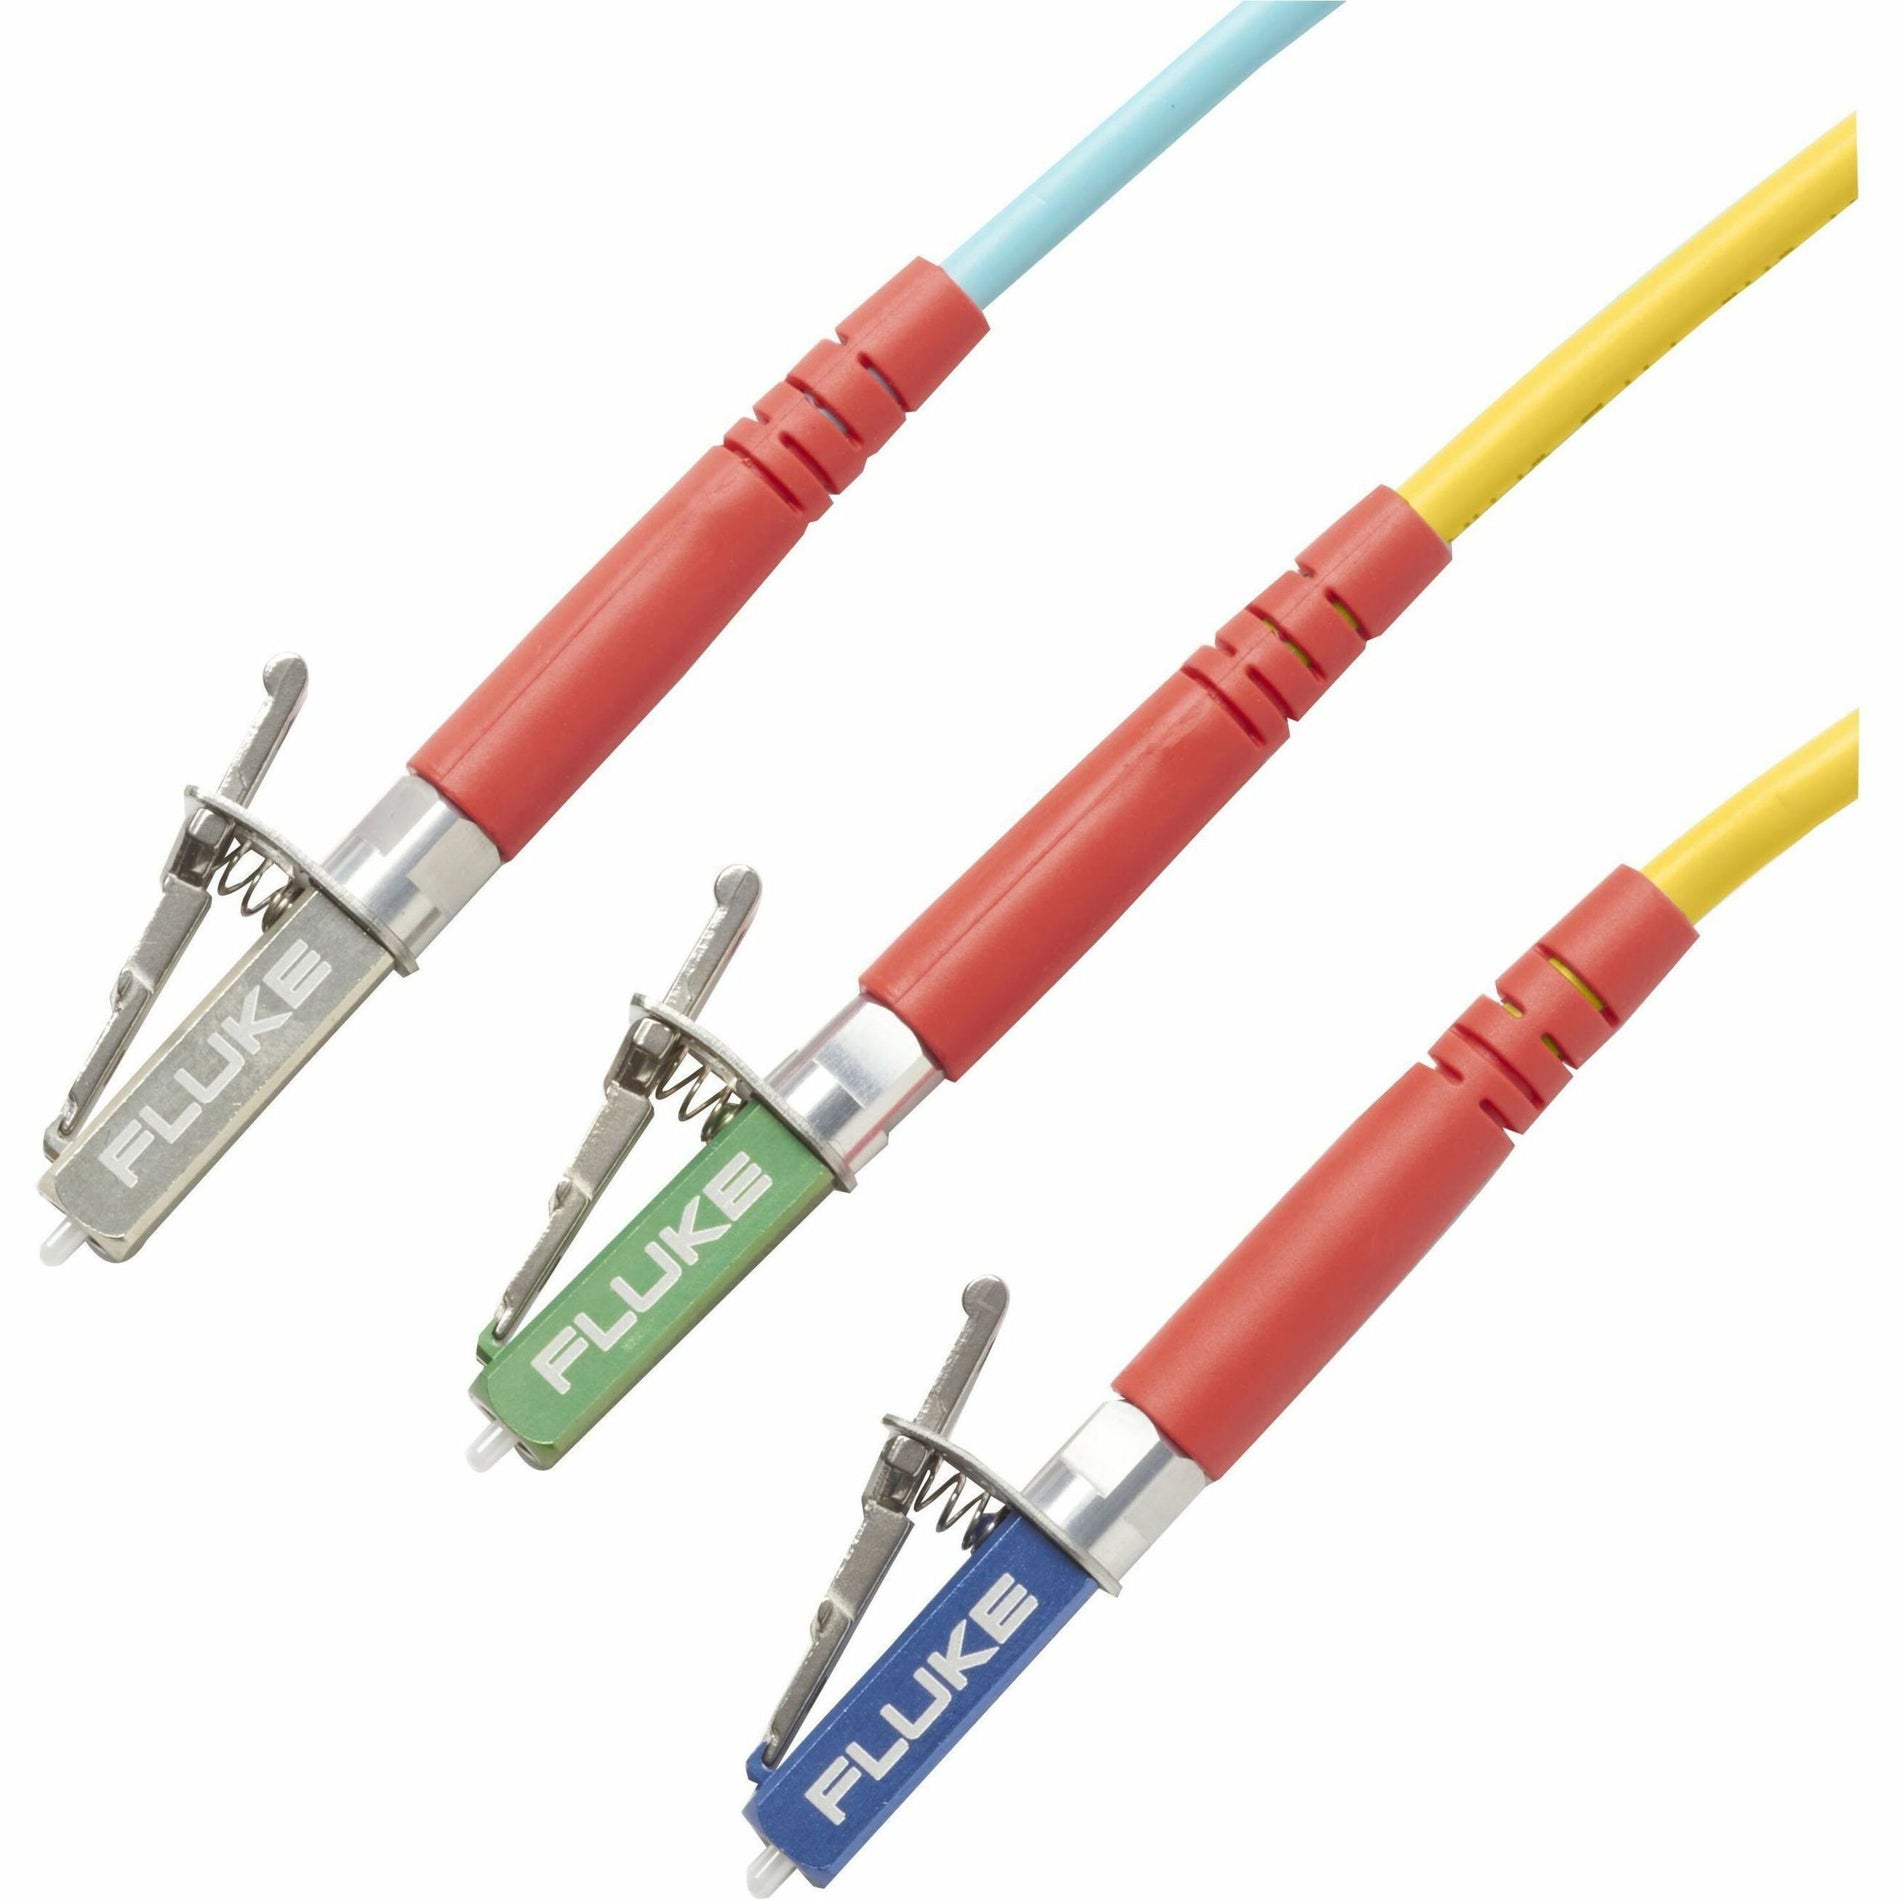 Fluke Networks Cable Tester Add-on Kit (MRC-62EFC-SCLCKITM)